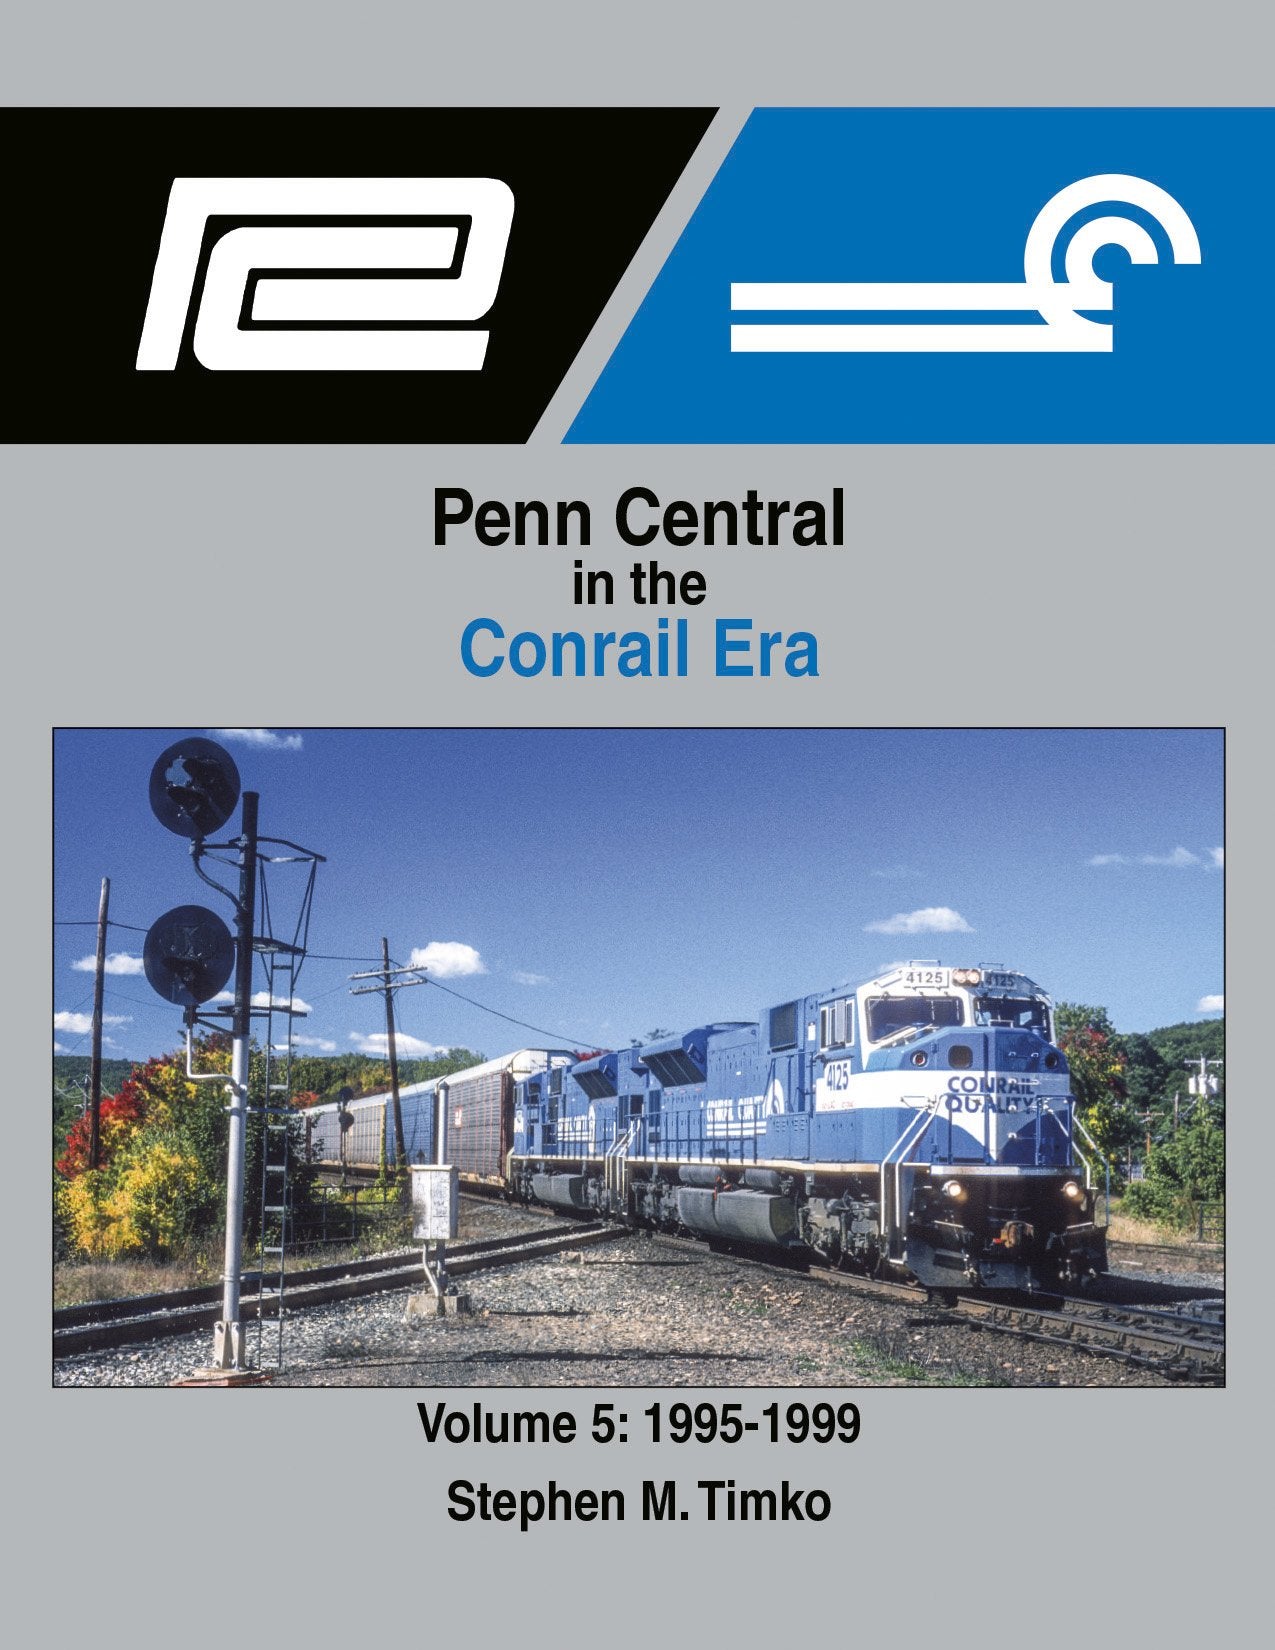 Morning Sun Books 1726 Penn Central in the Conrail Era Volume 5: 1995-1999